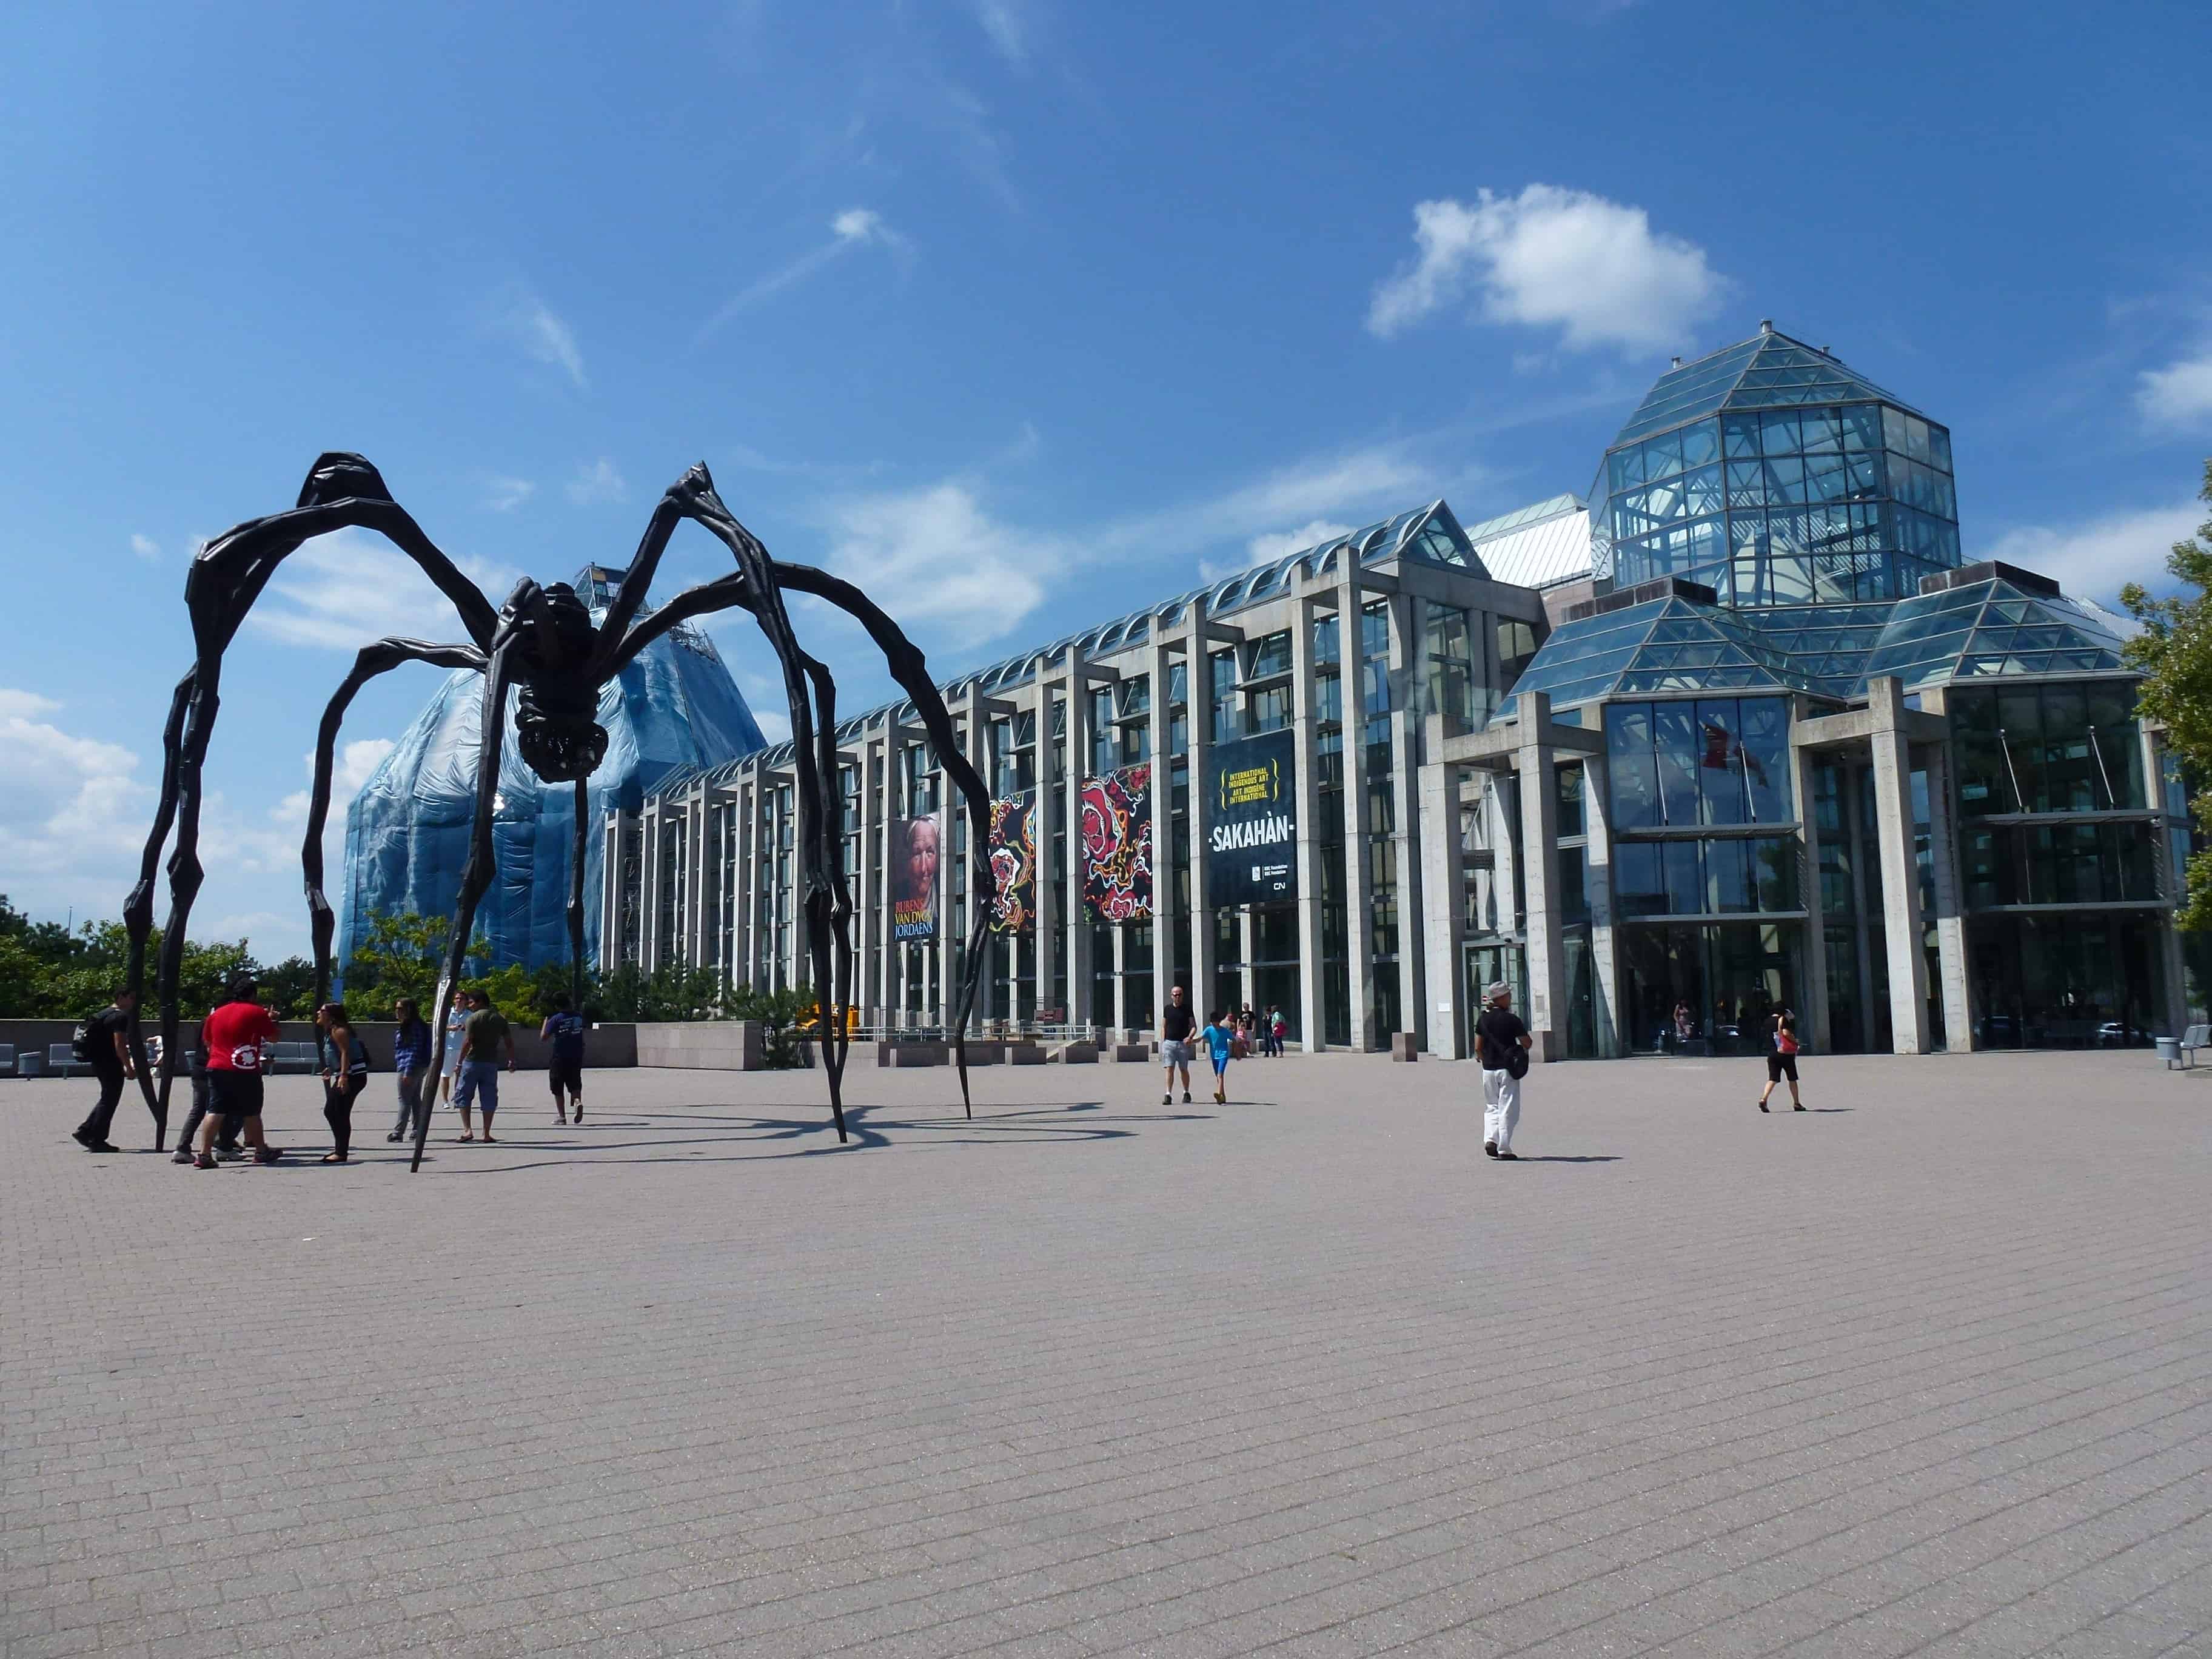 National Gallery of Canada in Ottawa, Ontario, Canada